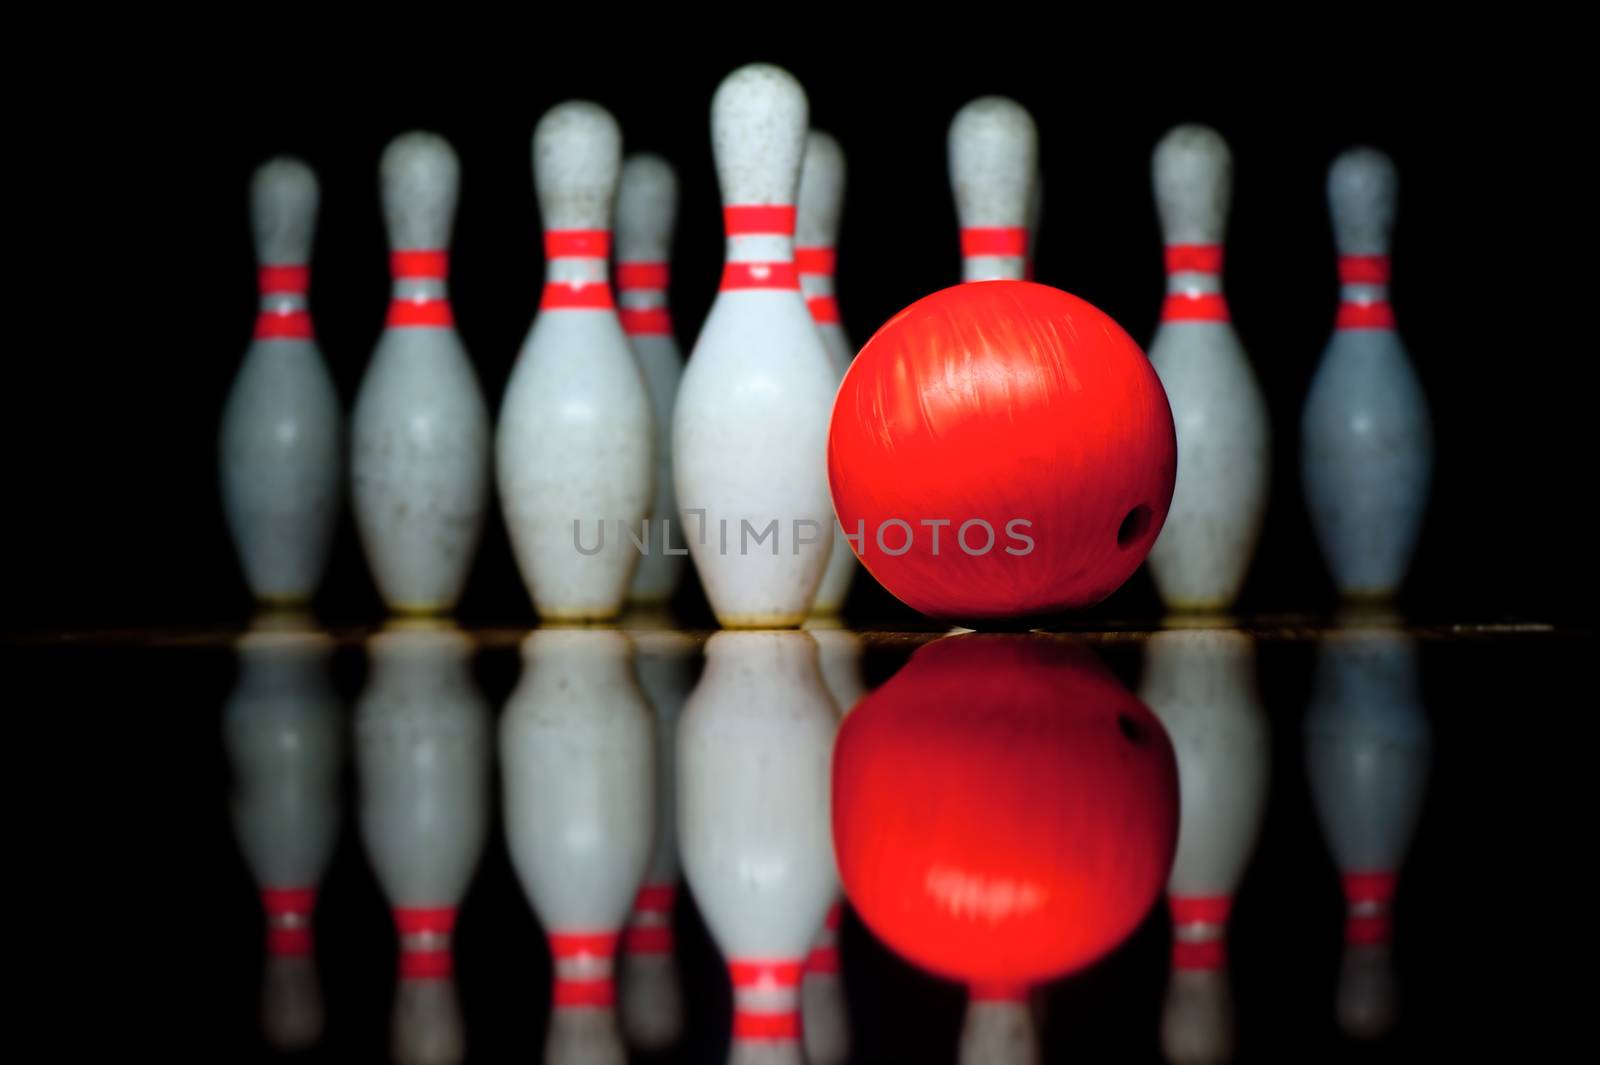 Ten bowling pins and bowling ball